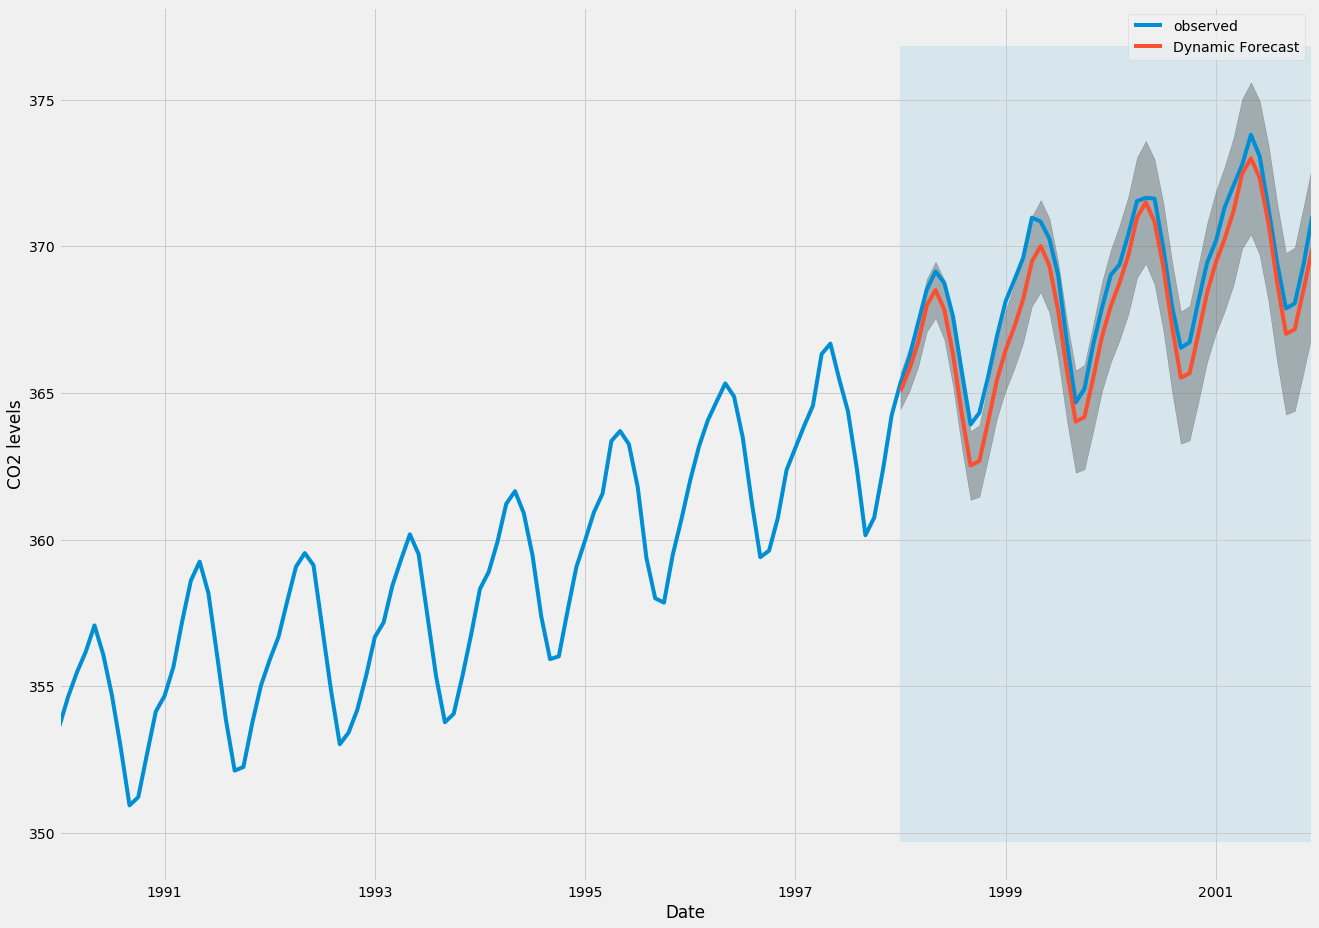 Figure 4: CO2 Levels Dynamic Forecast